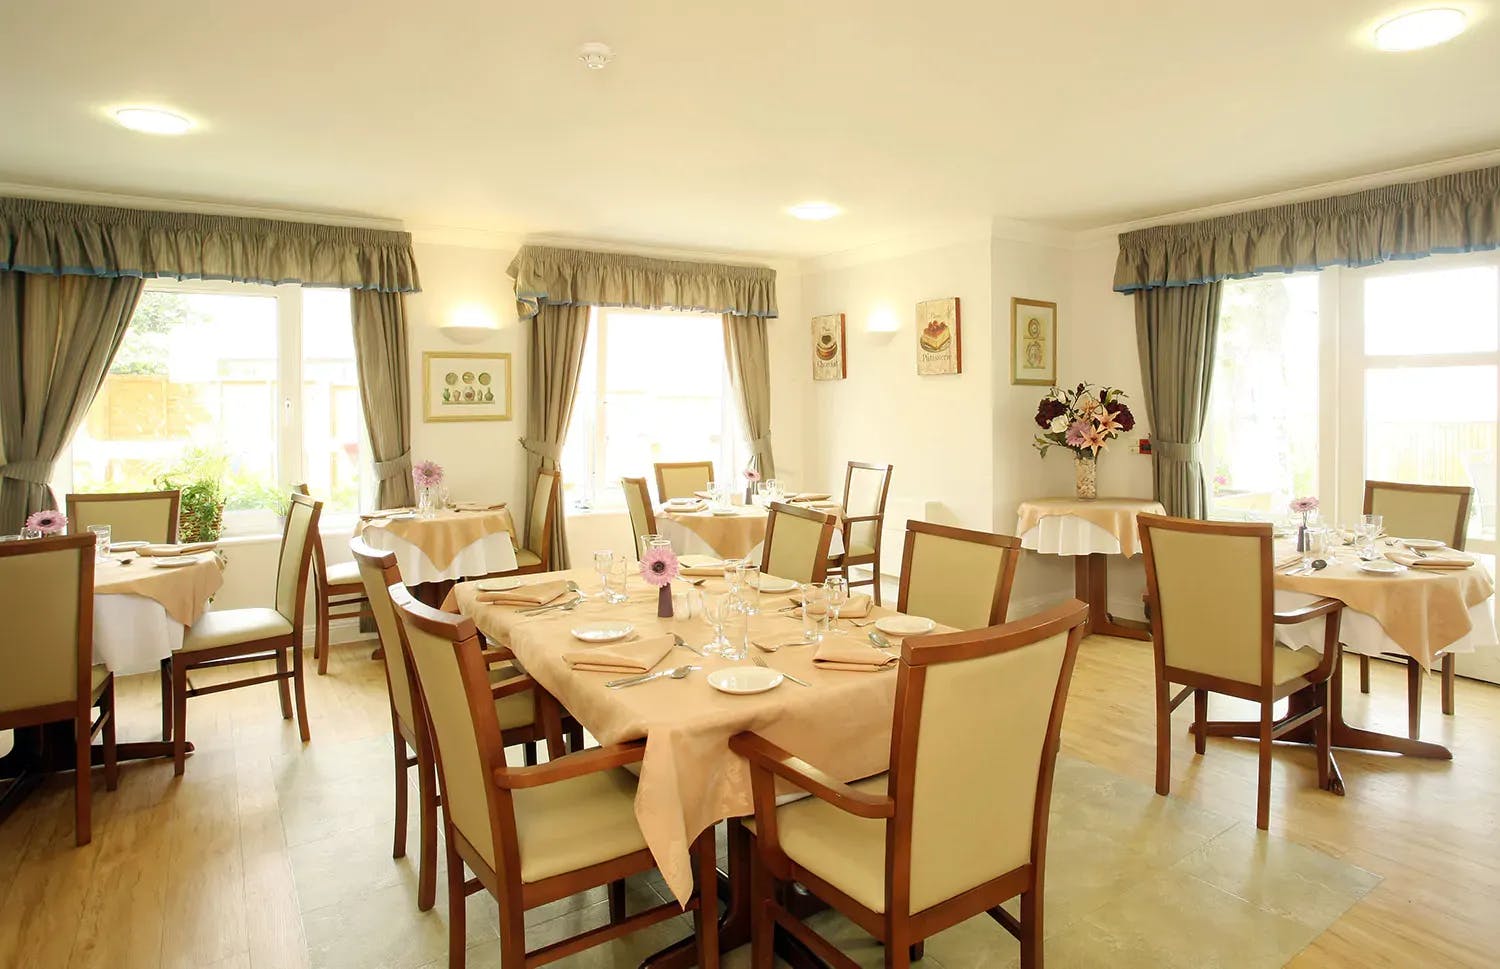 Dining room of Queen Elizabeth Park in Guildford